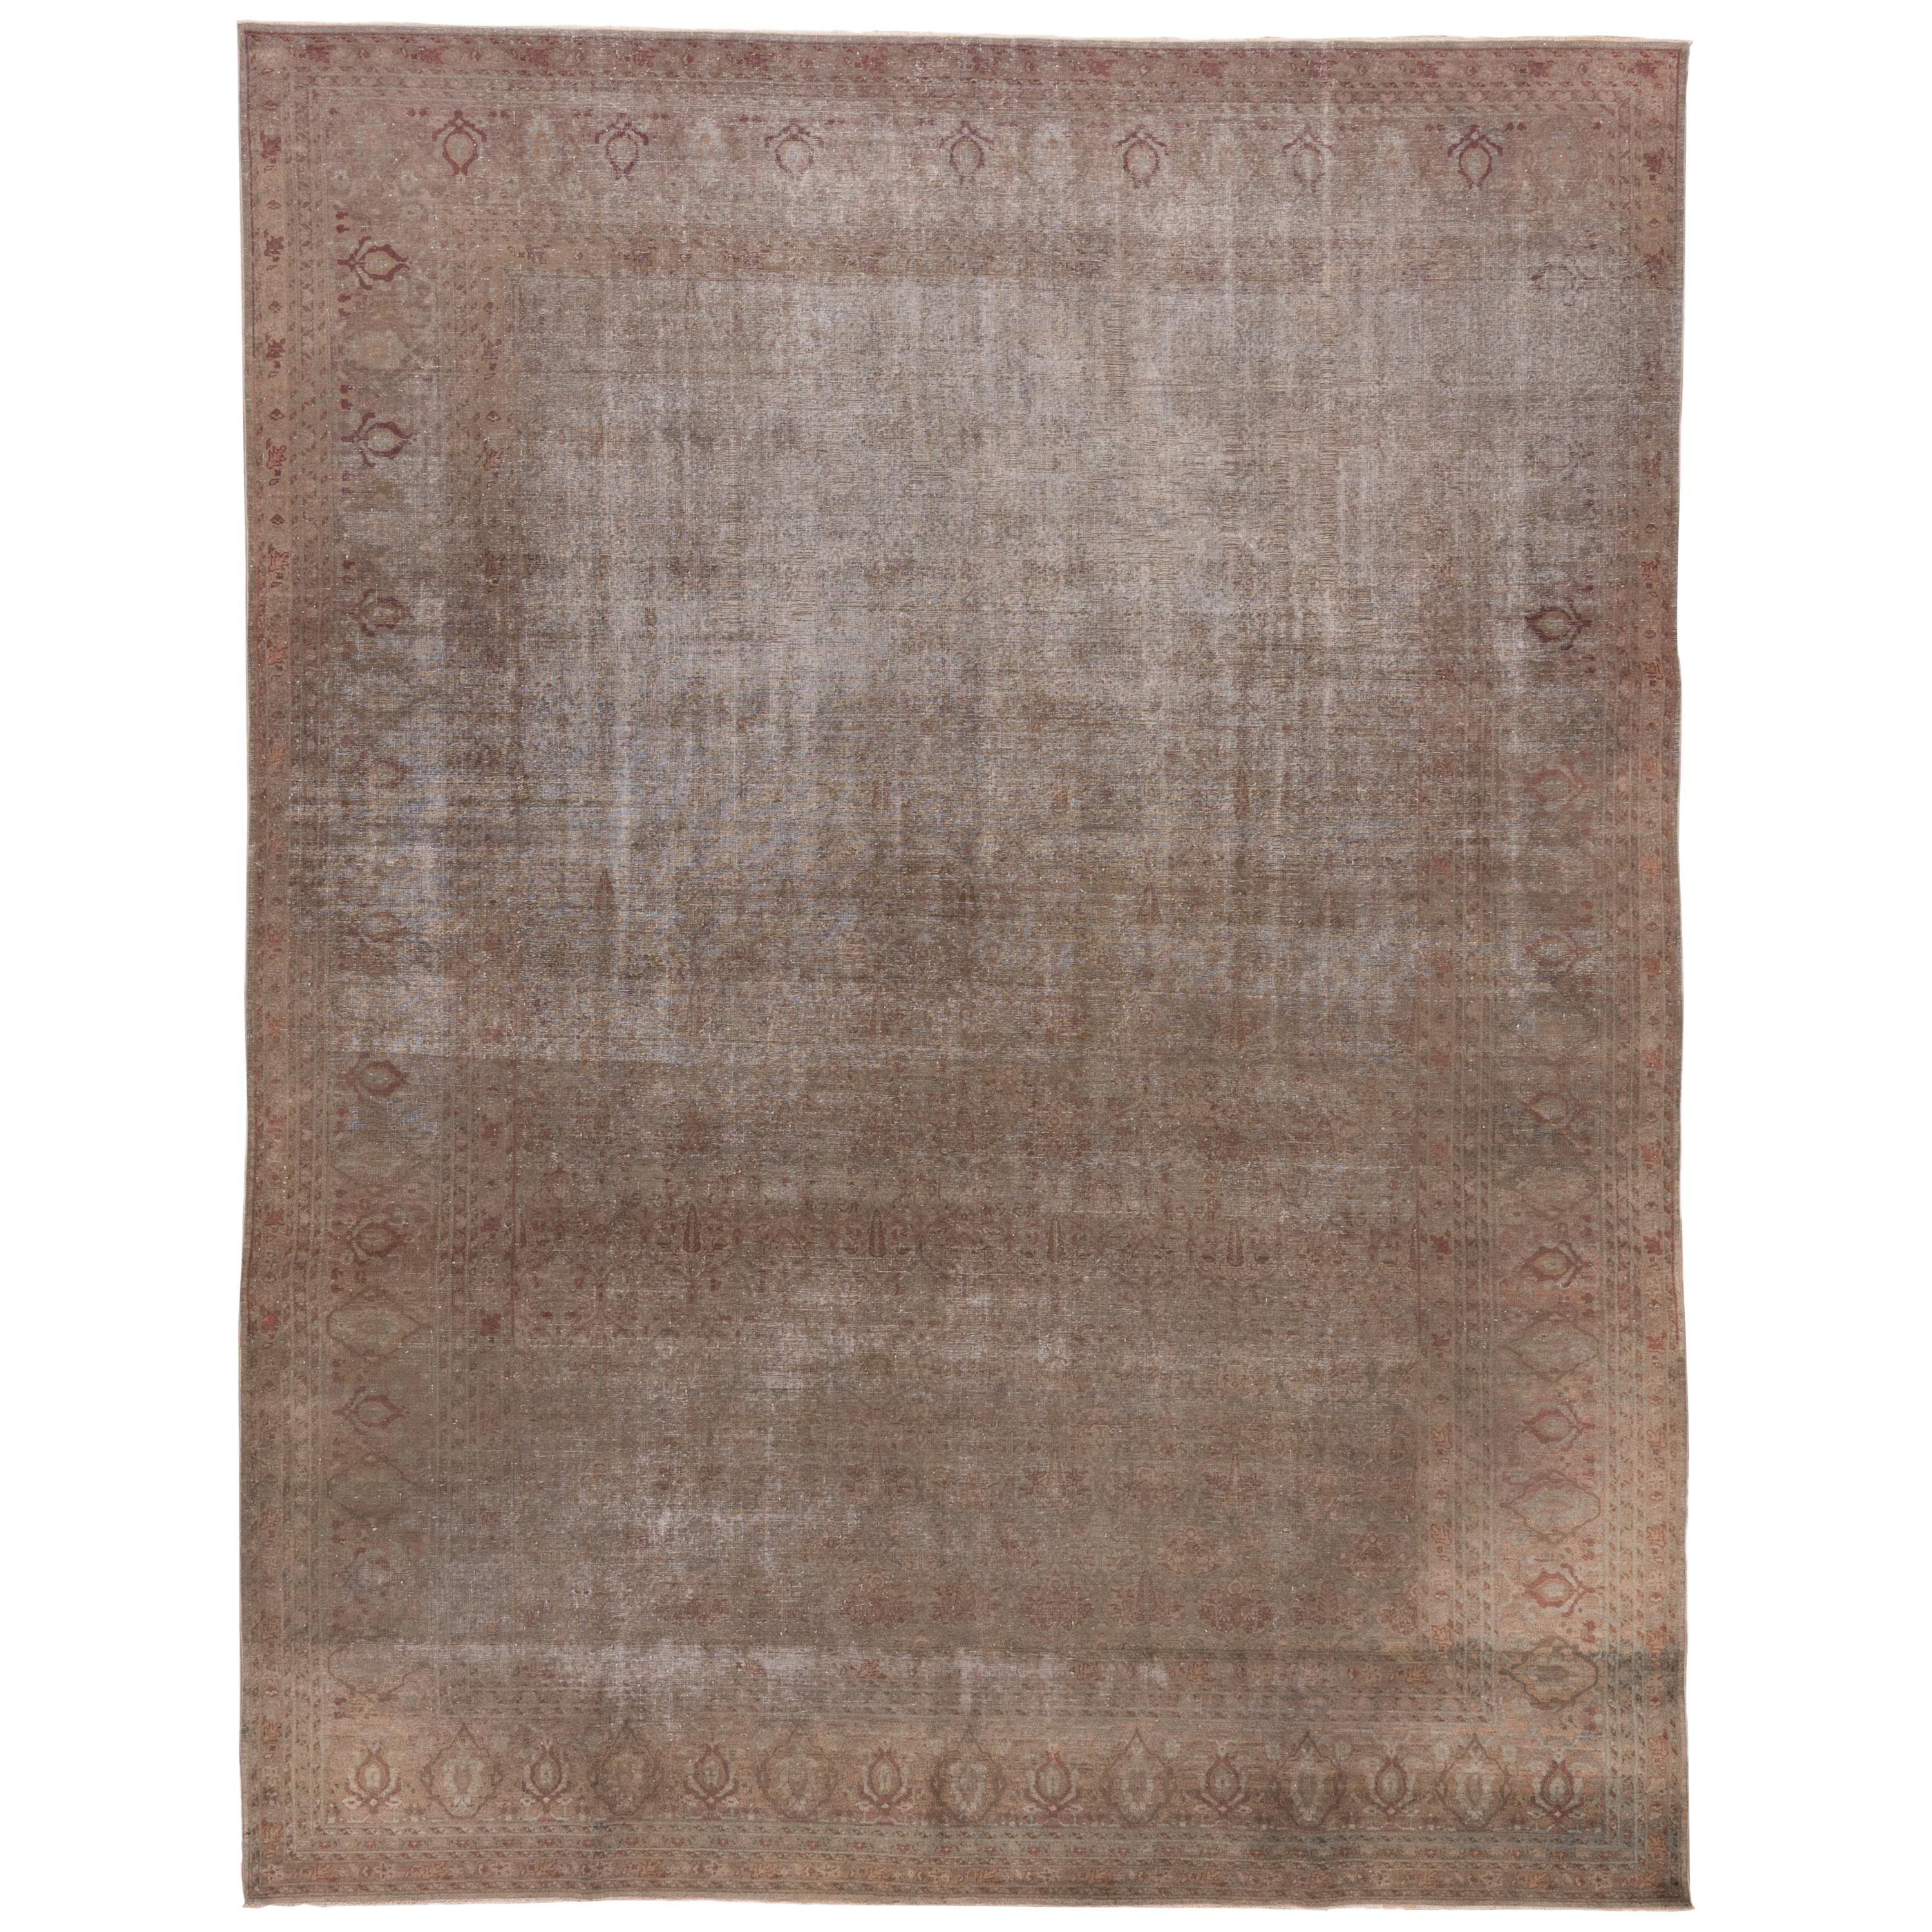 Antique Distressed Indian Amritzar Carpet, circa 1910s, Mauve Field